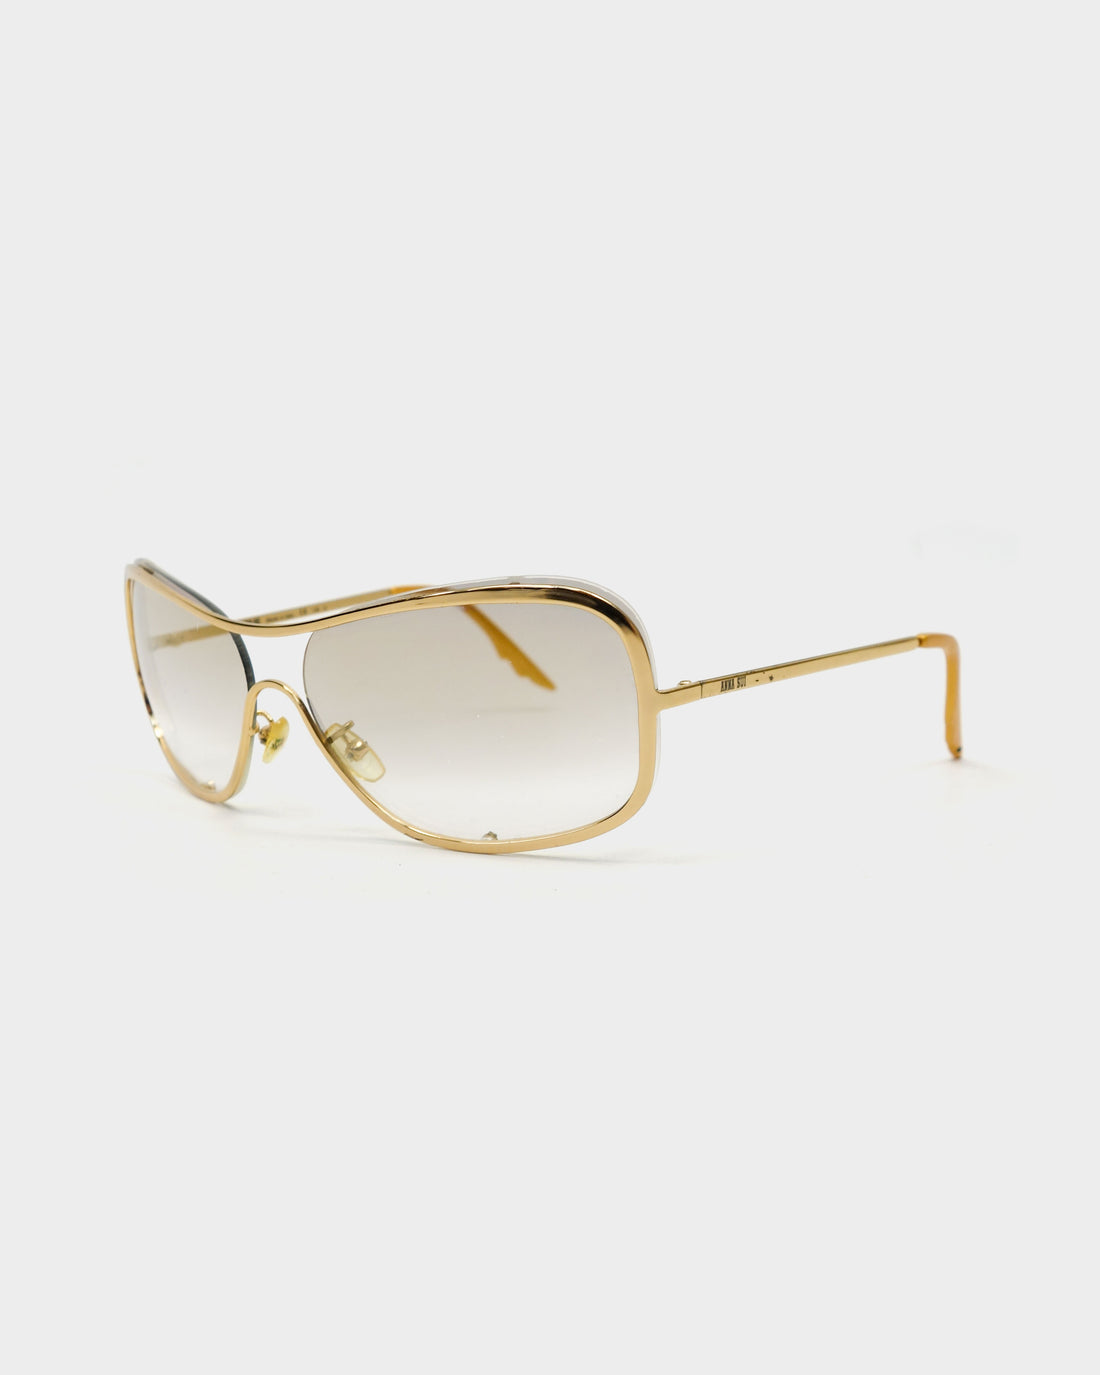 Anna Sui Aviator Golden Sunglasses 2000's